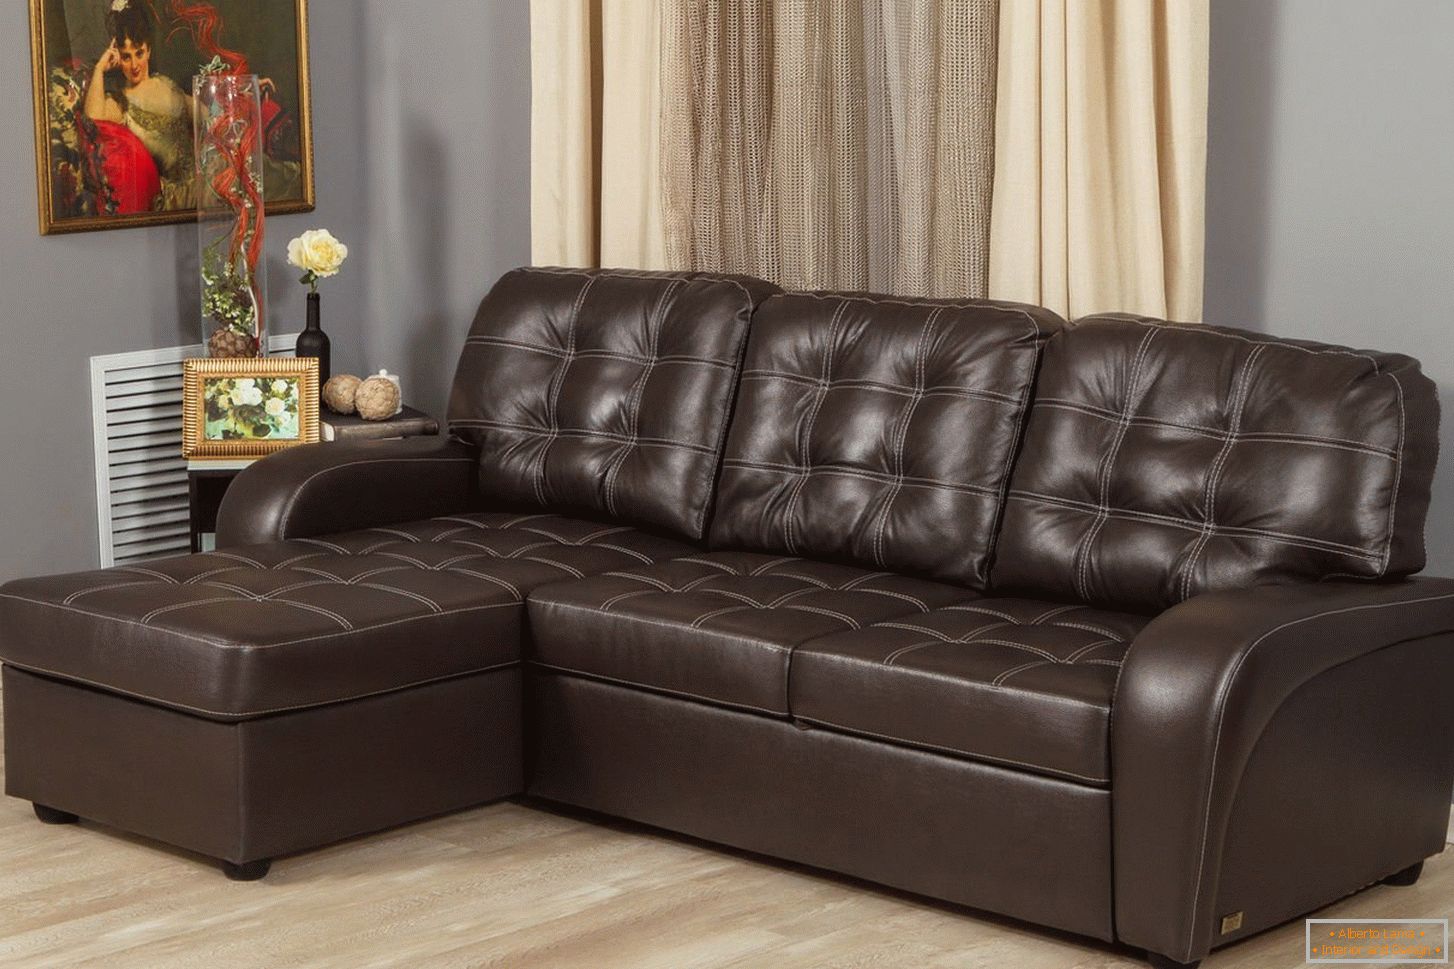 Leather sofa in the interior